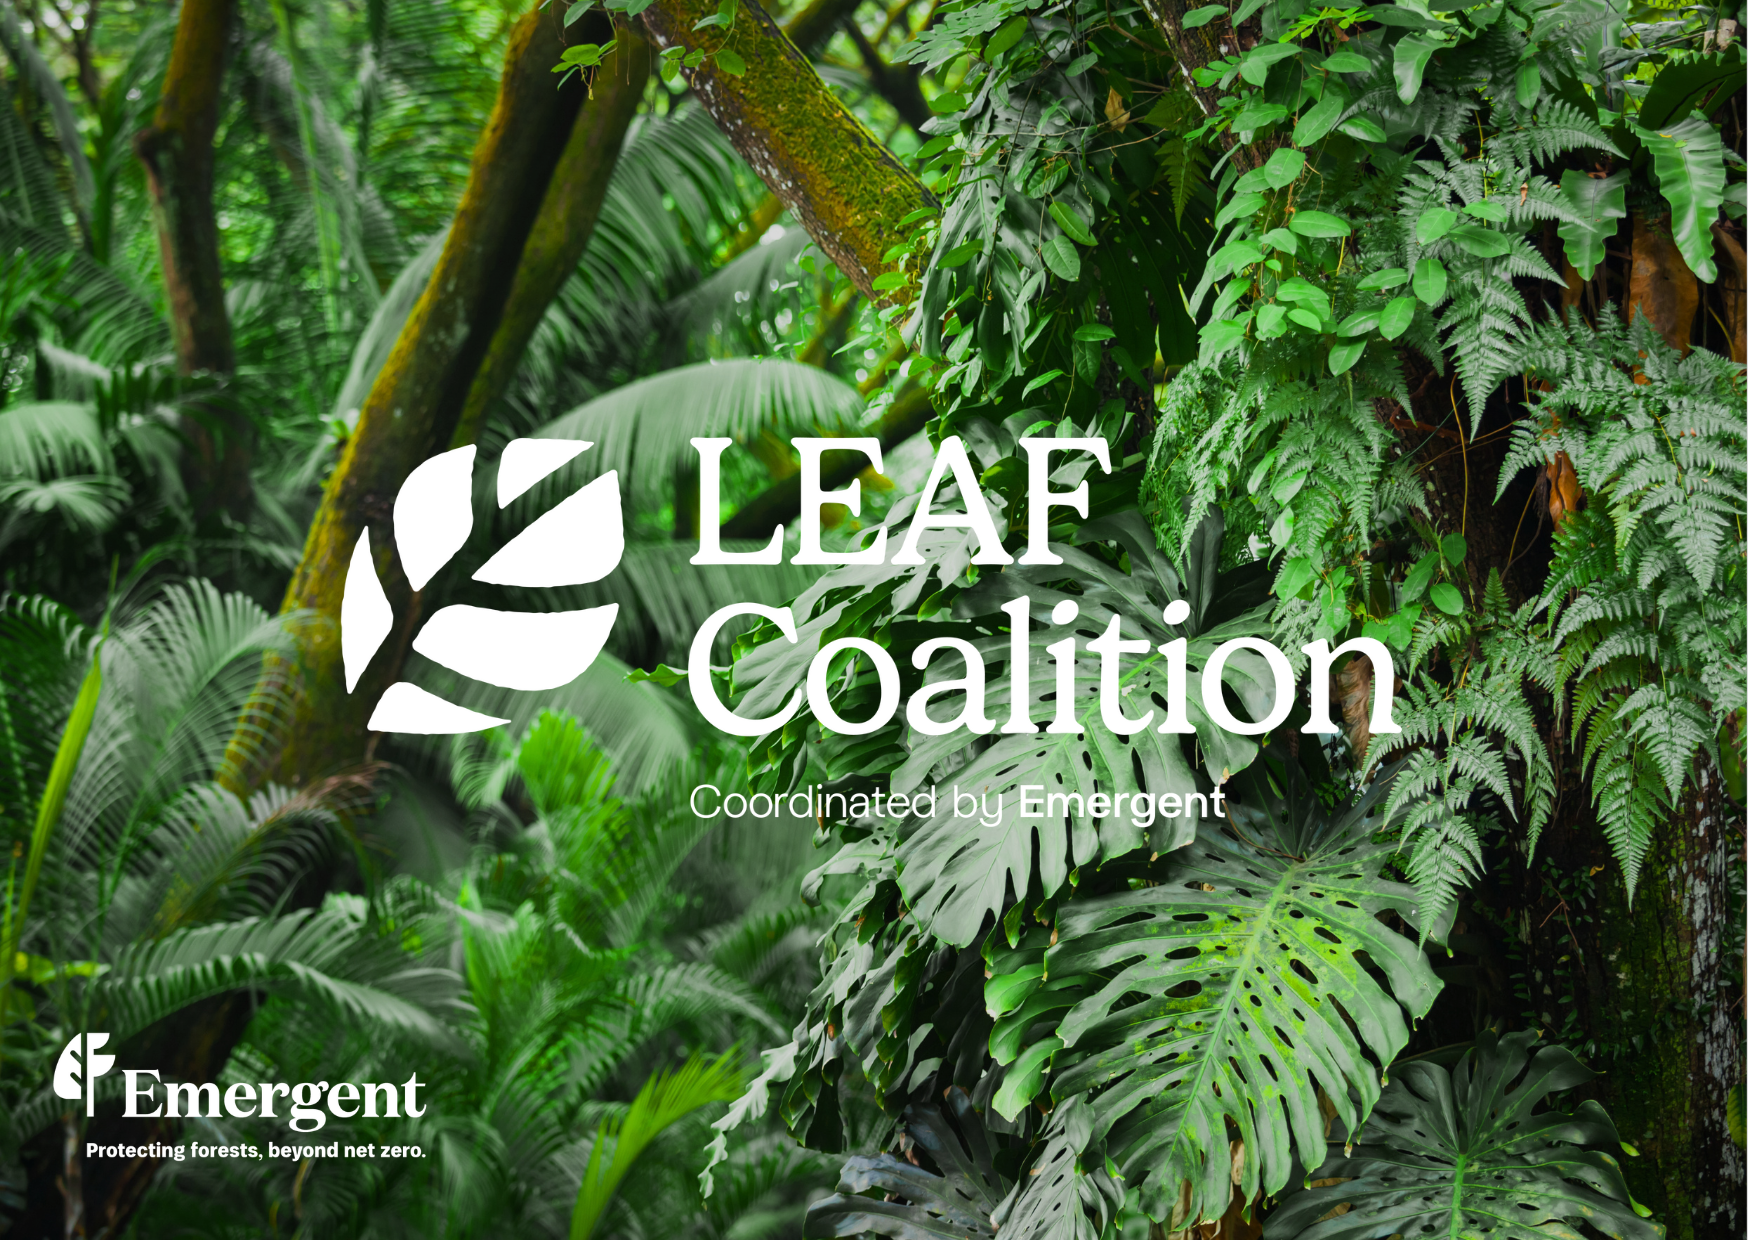 LEAF Coalition